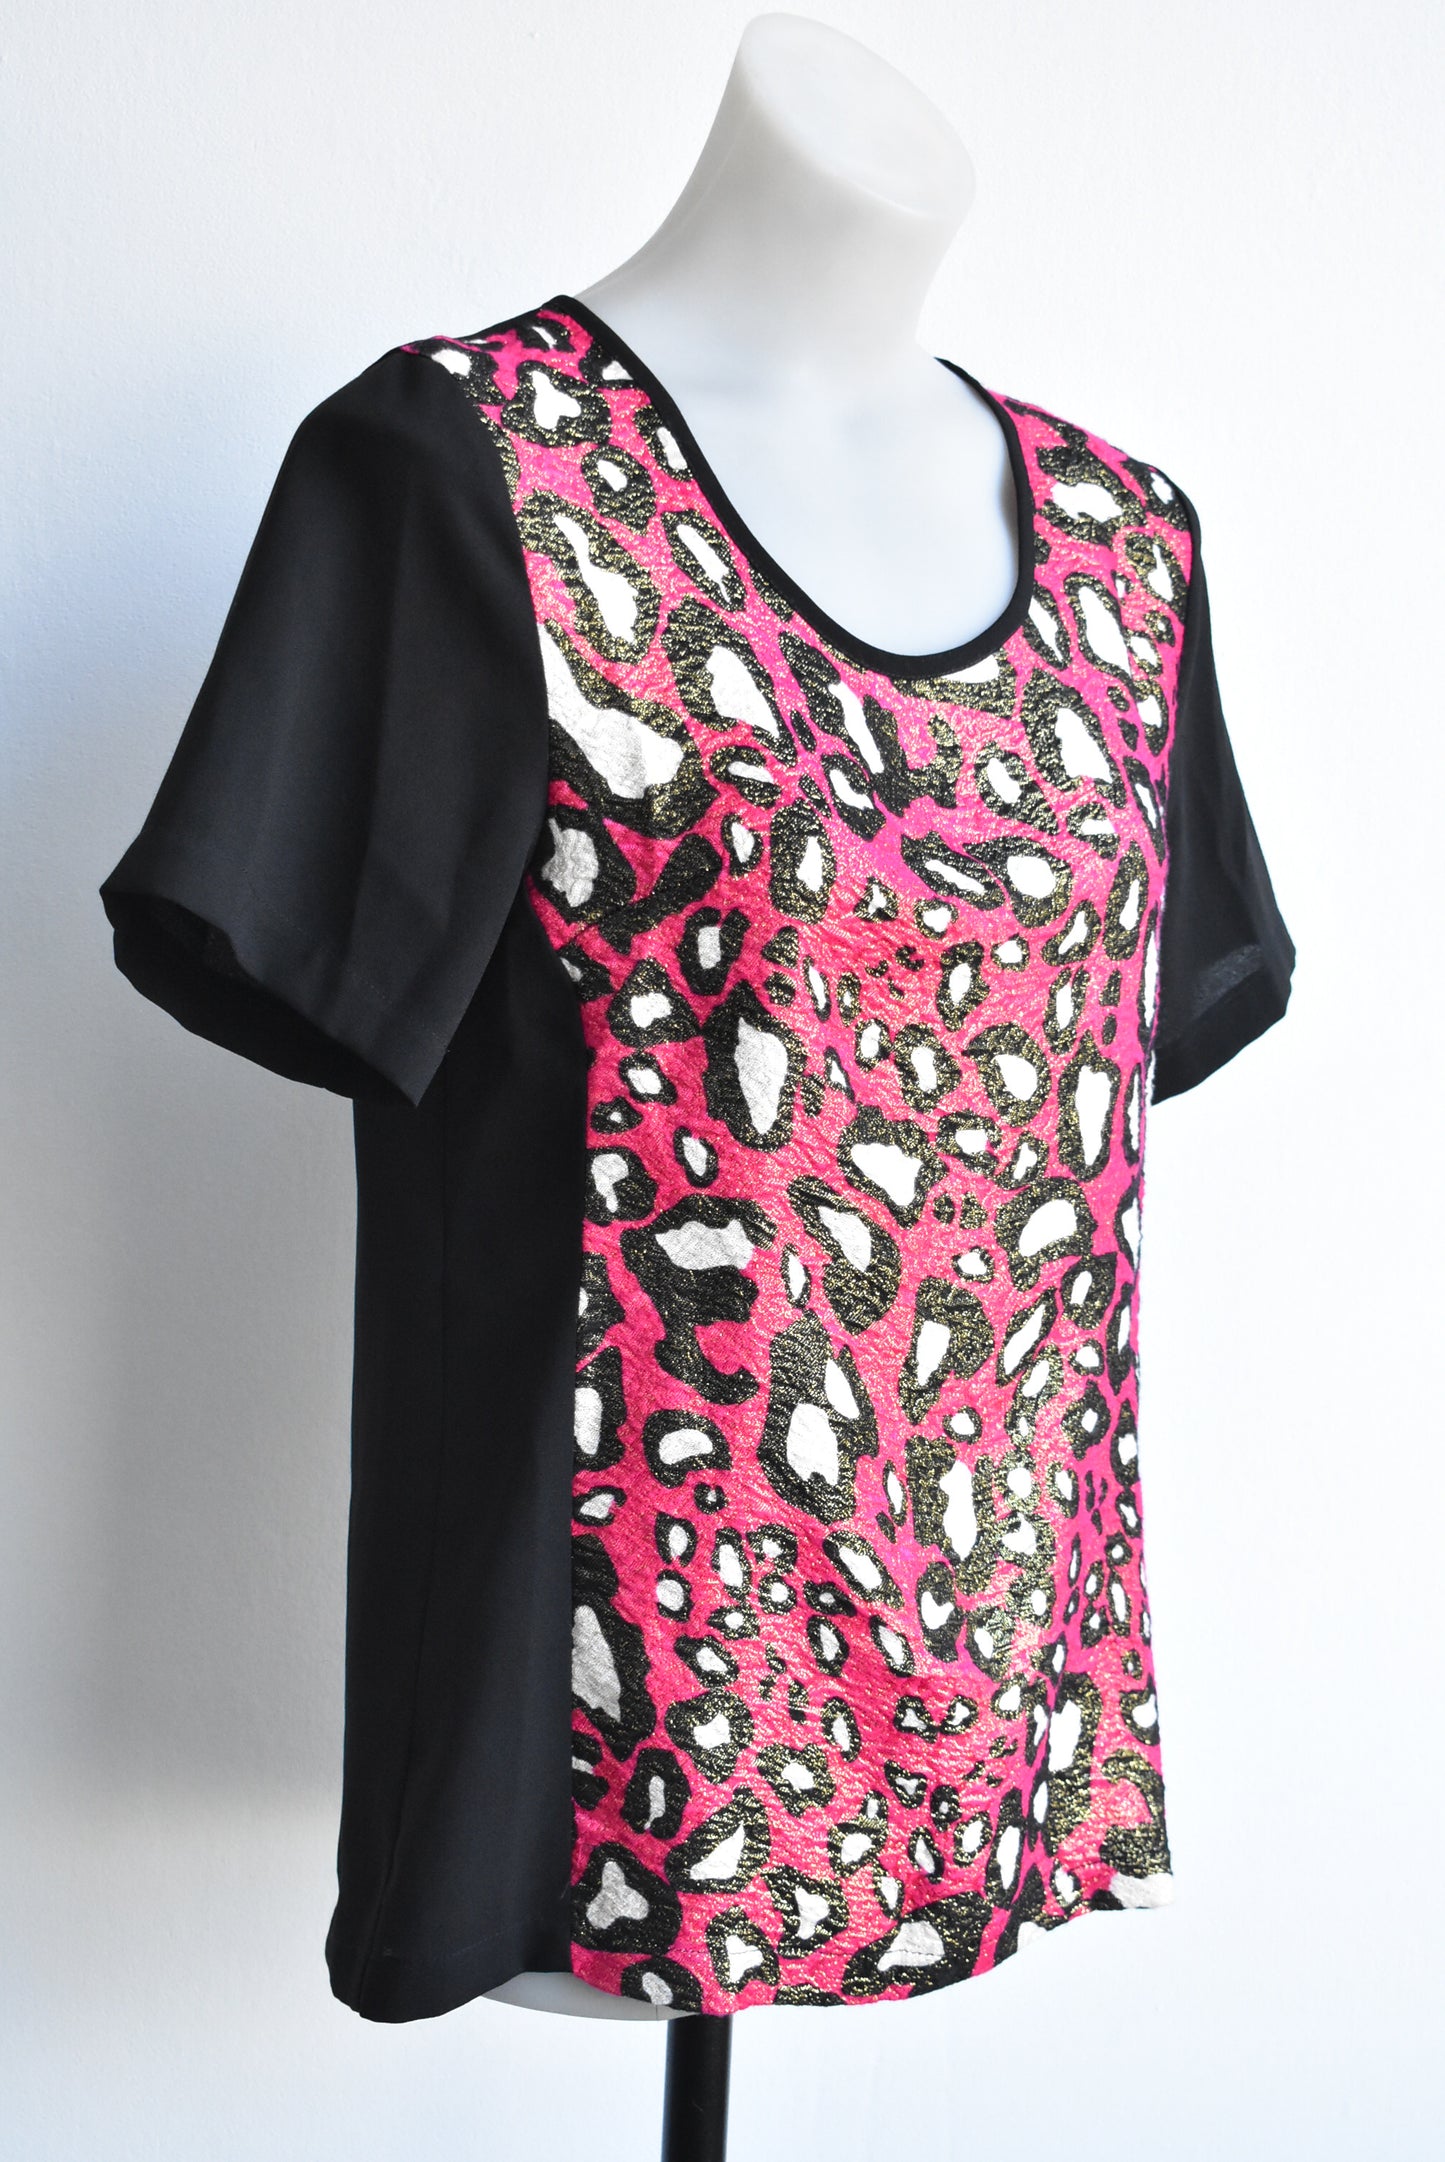 Erina Emery pink leopard print top, size 8